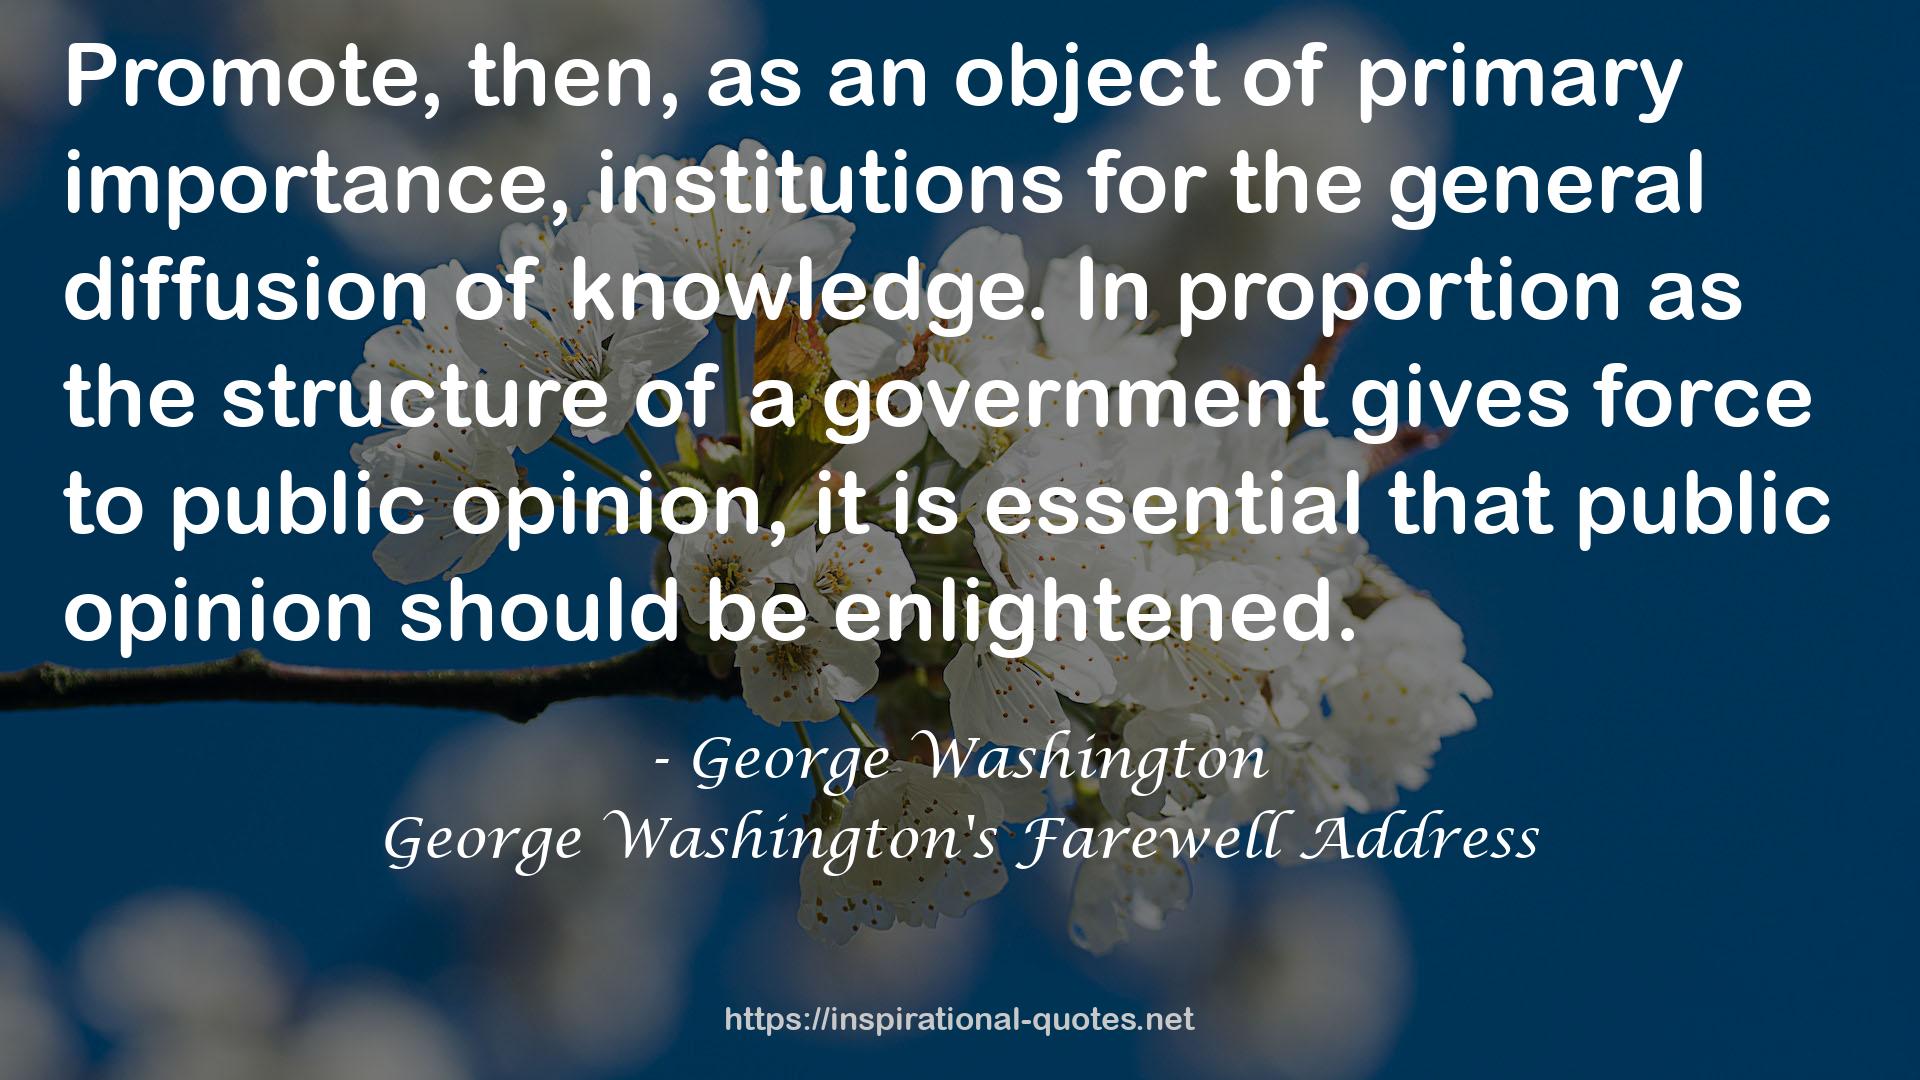 George Washington's Farewell Address QUOTES